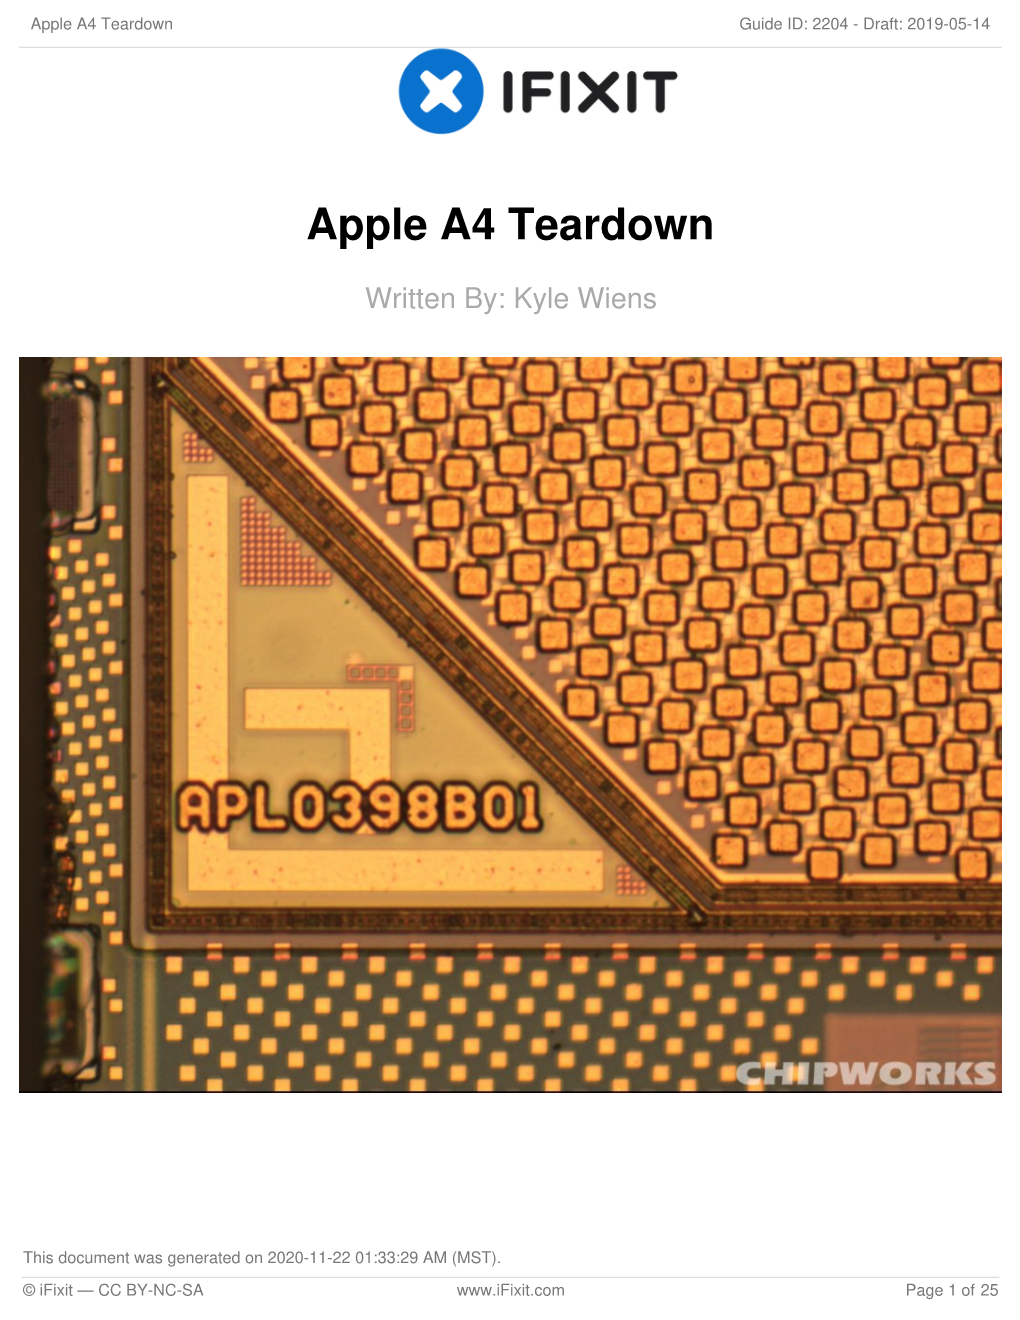 Apple A4 Teardown Guide ID: 2204 - Draft: 2019-05-14